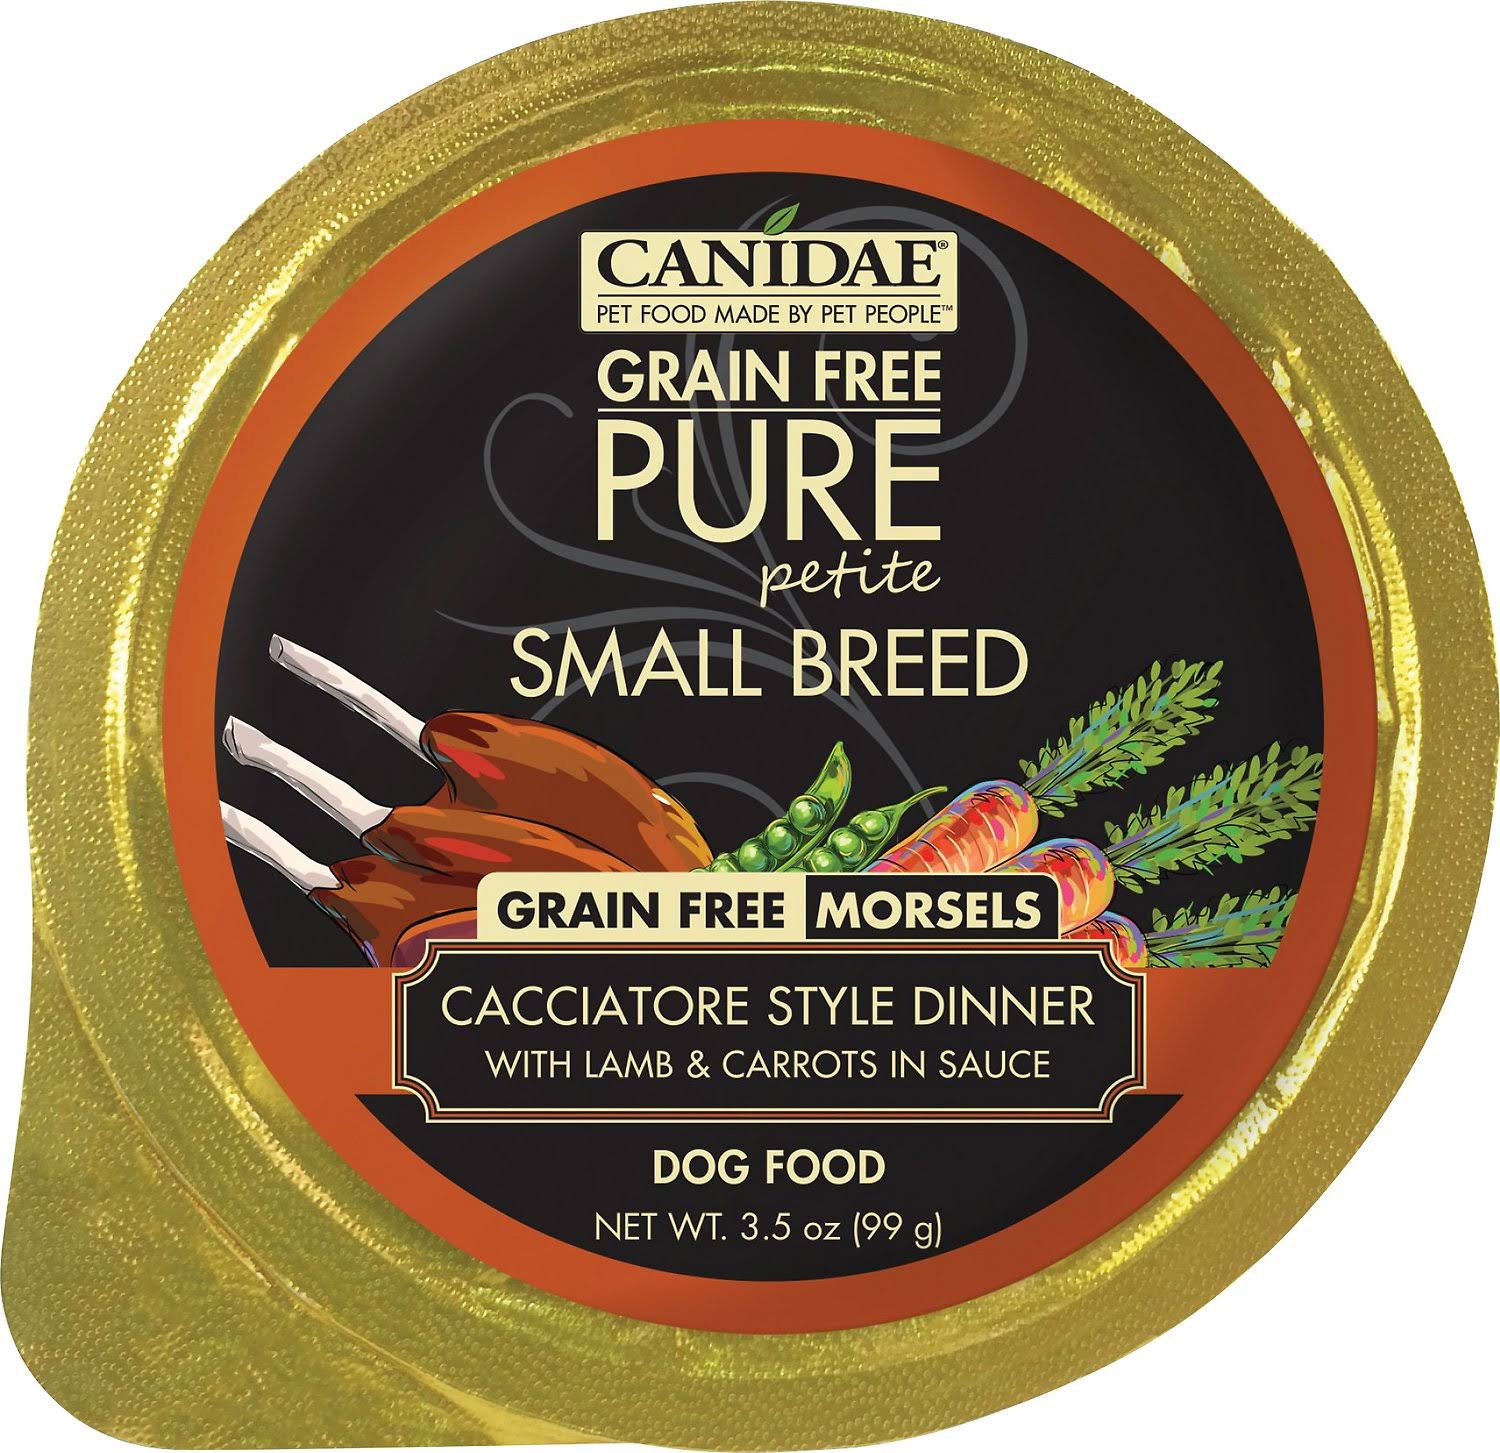 Canidae Pure Petite Grain Free Morsels Dog Food - 3.5 oz